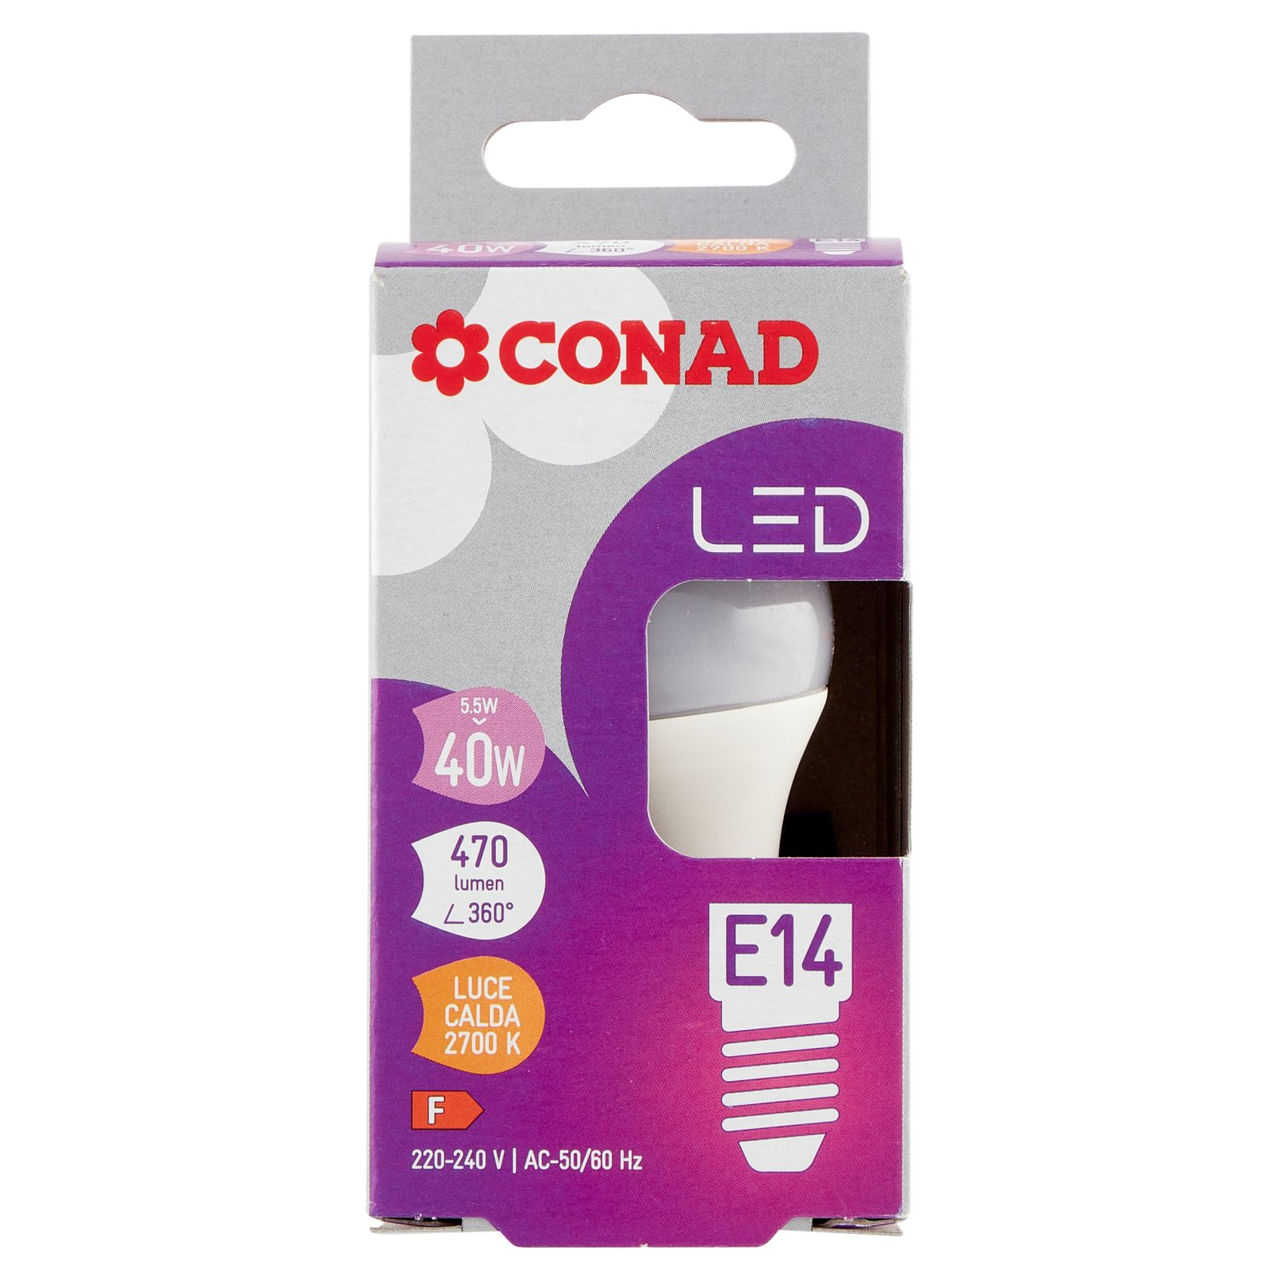 CONAD Led 5.5W 470 Lumen E14 Luce Calda